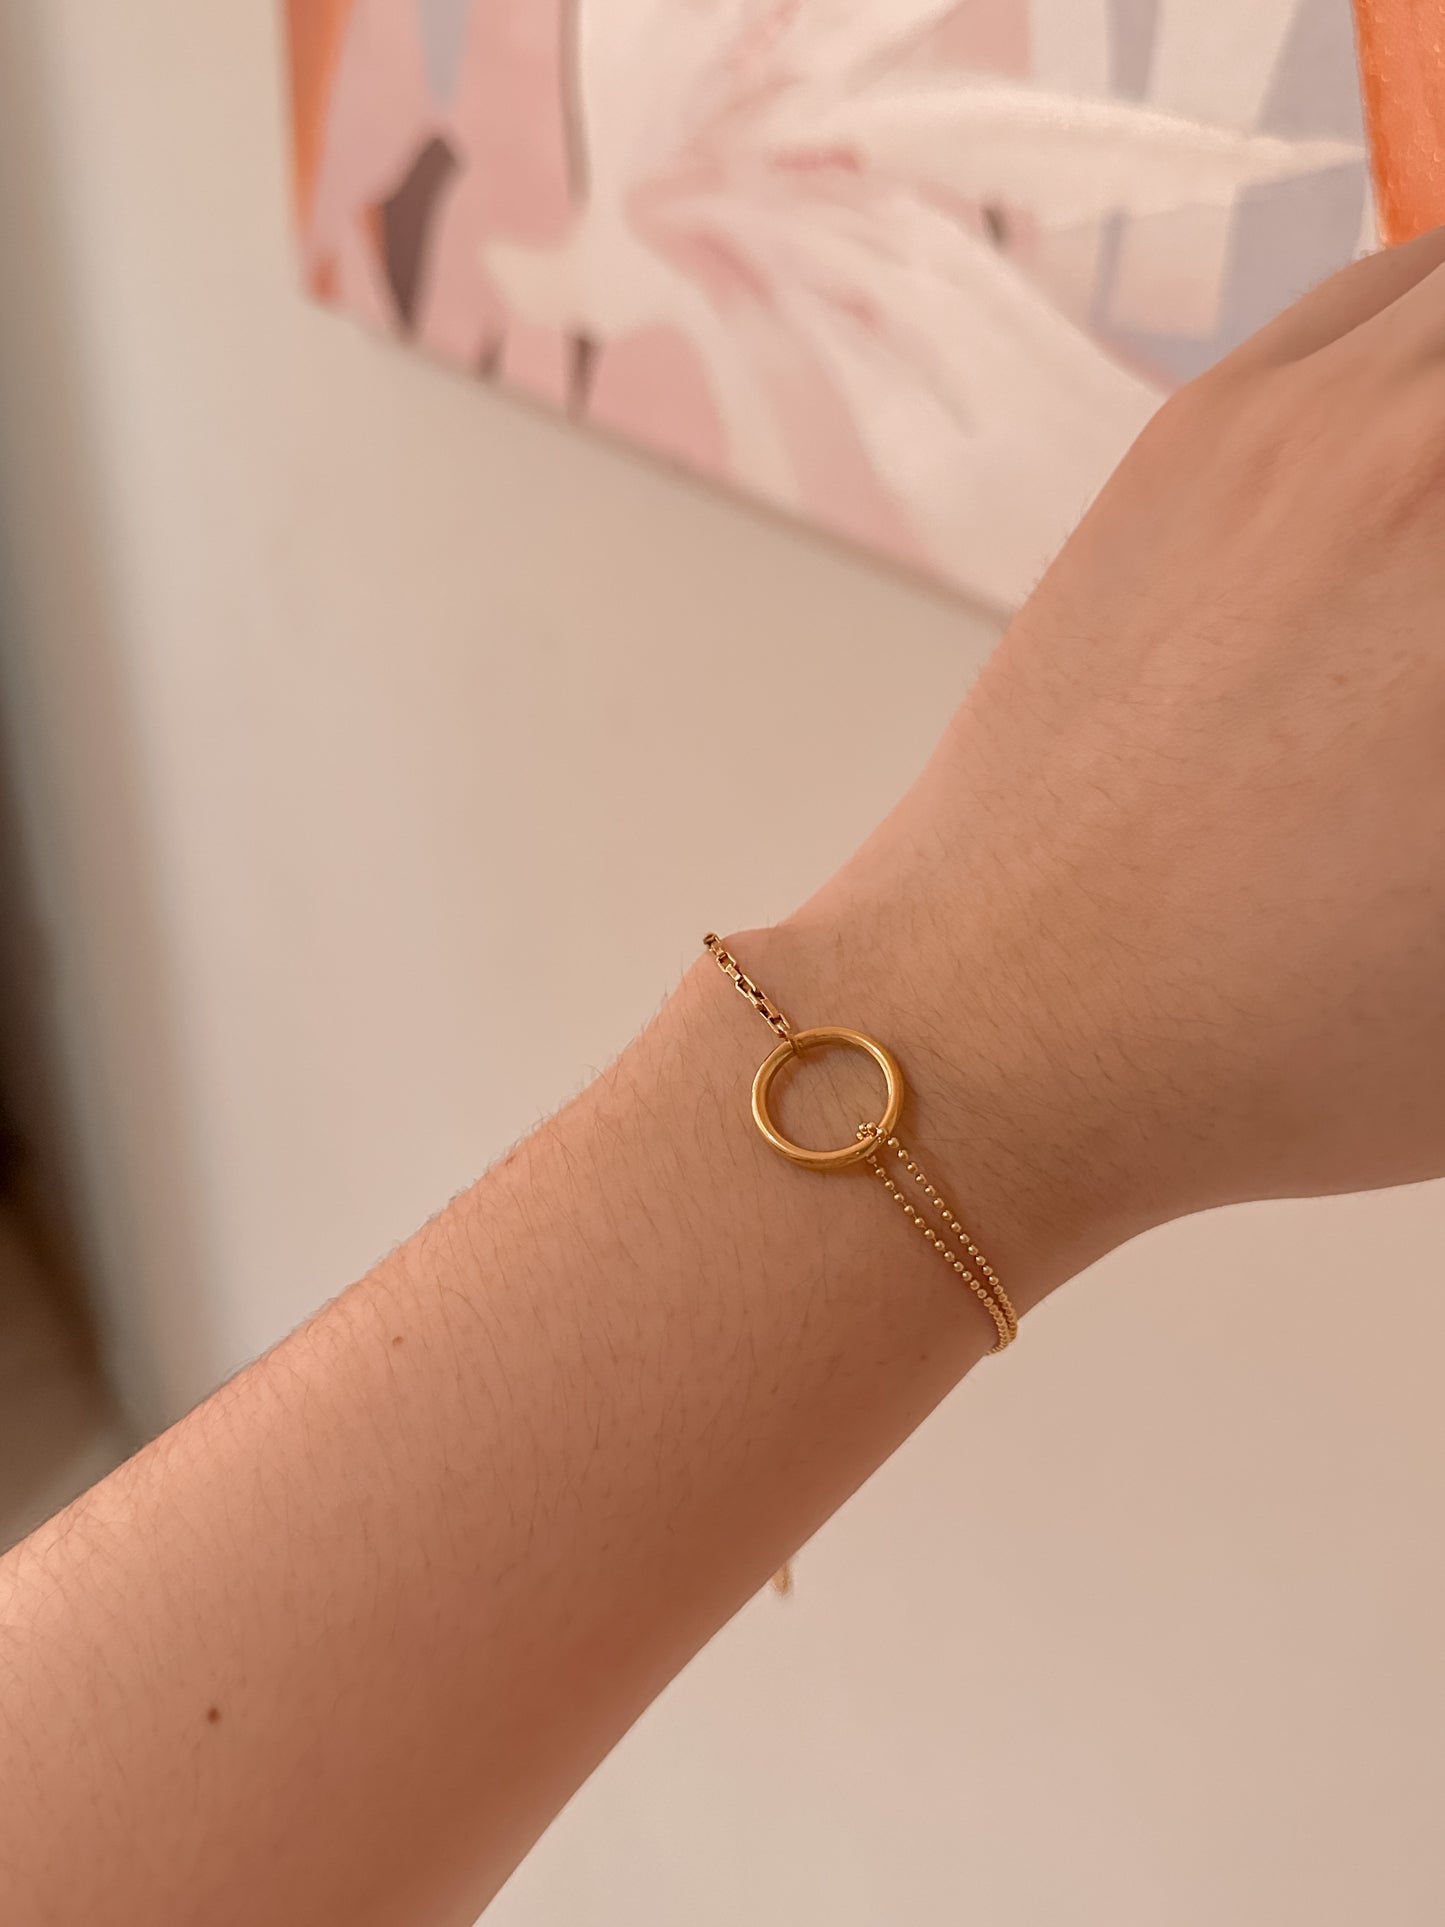 Simple bracelet